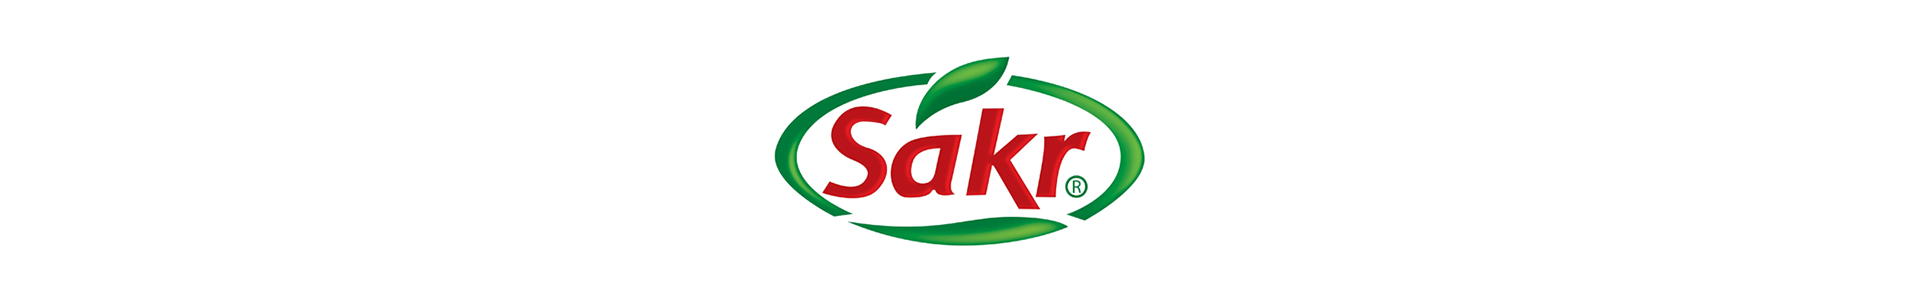 artlink advertising Communication Sakr